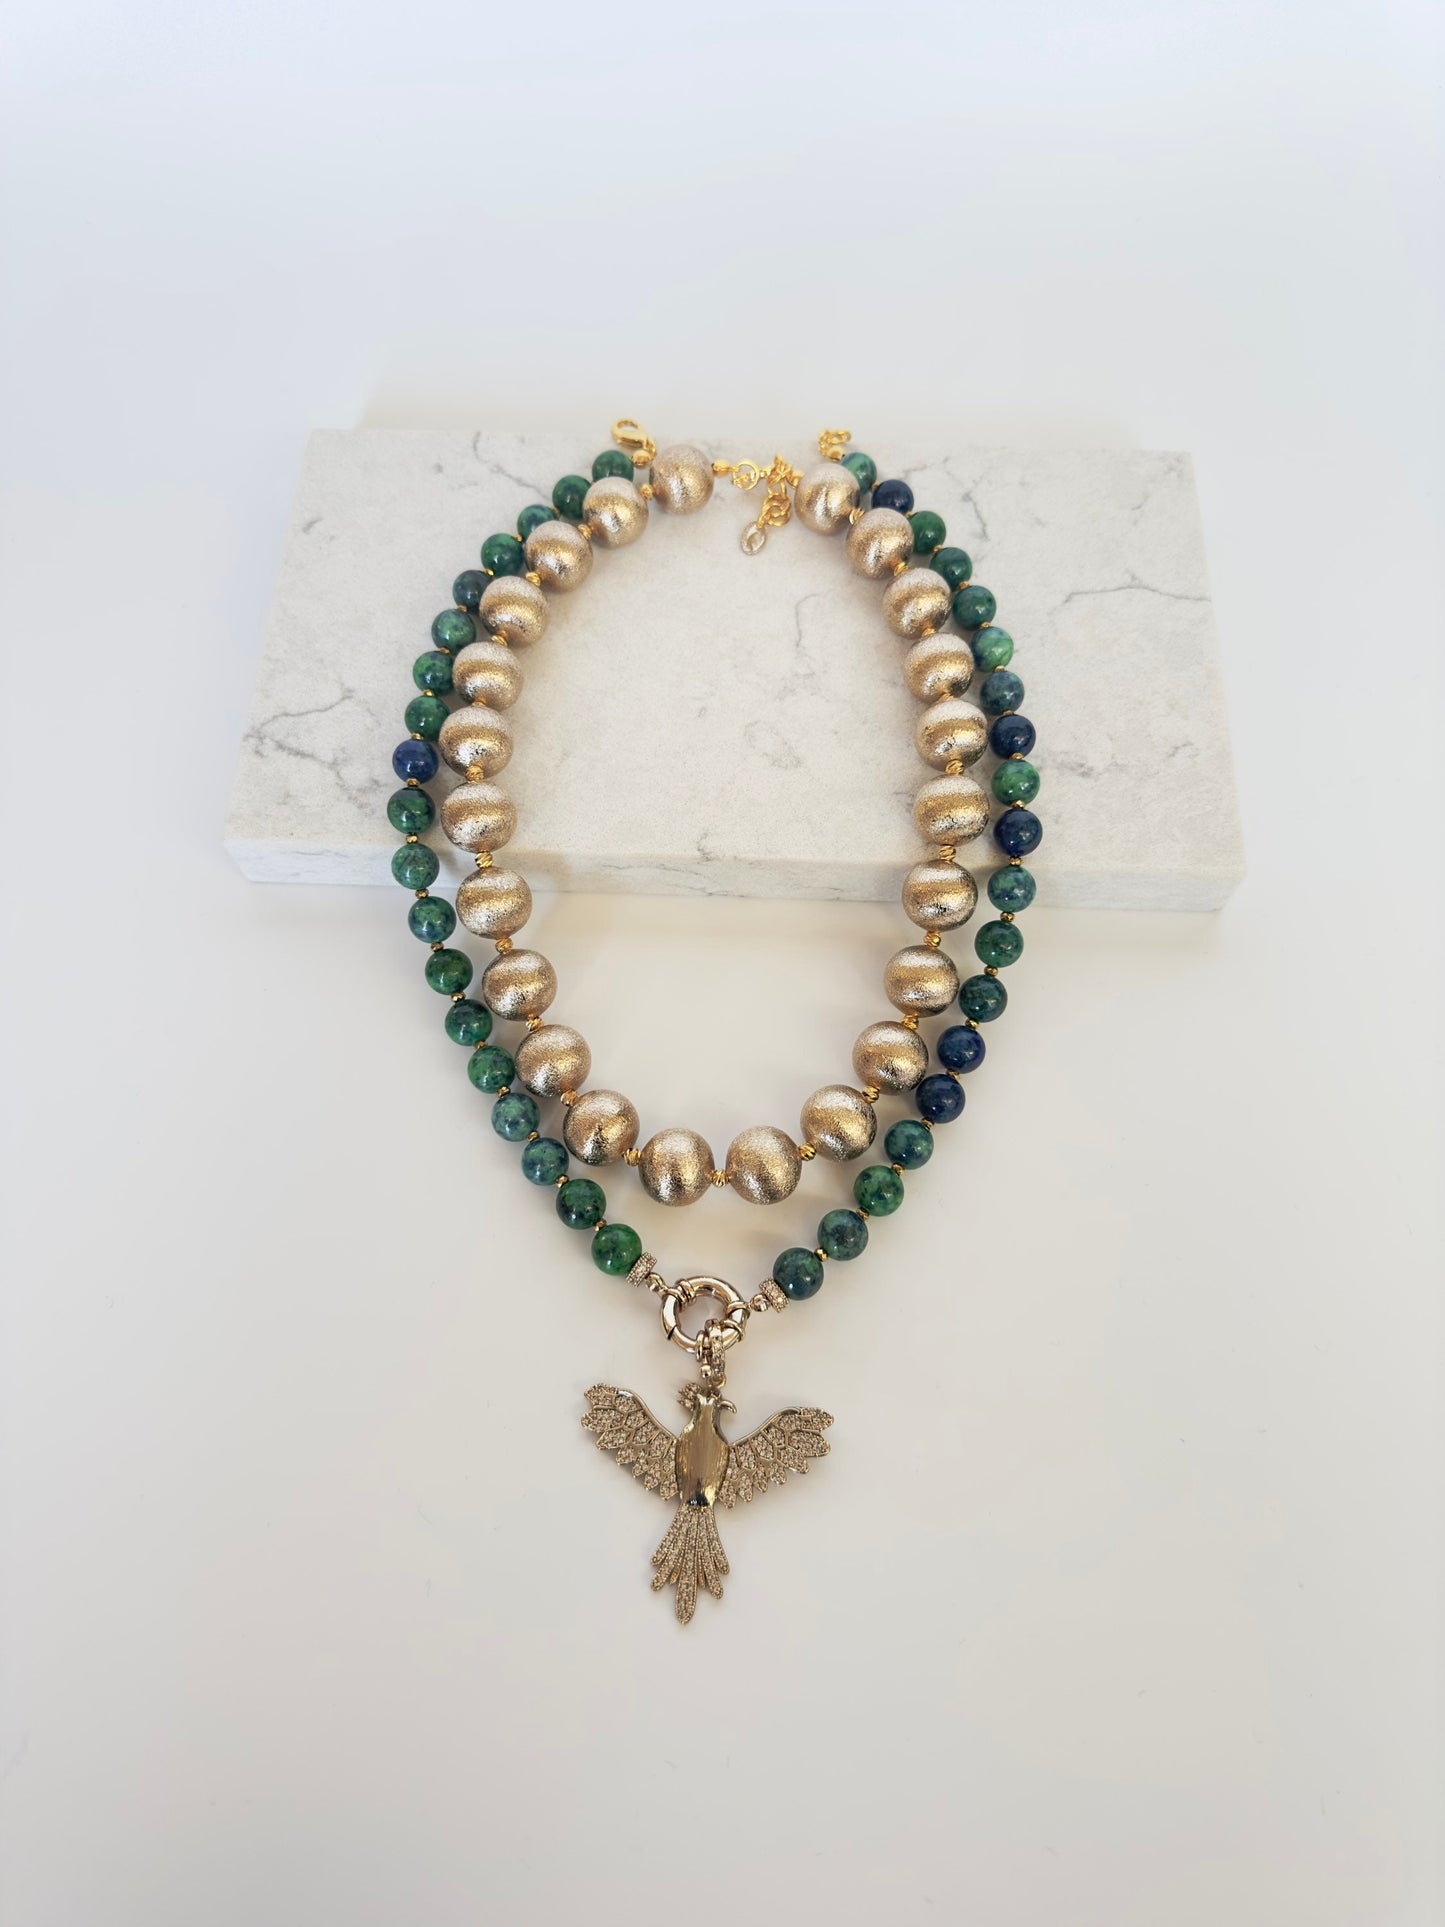 Gemstone Necklace, Big Brass Balls with Azurite Beads, Phoenix Necklace for Birthday Gifts, Handmade Statement Necklace